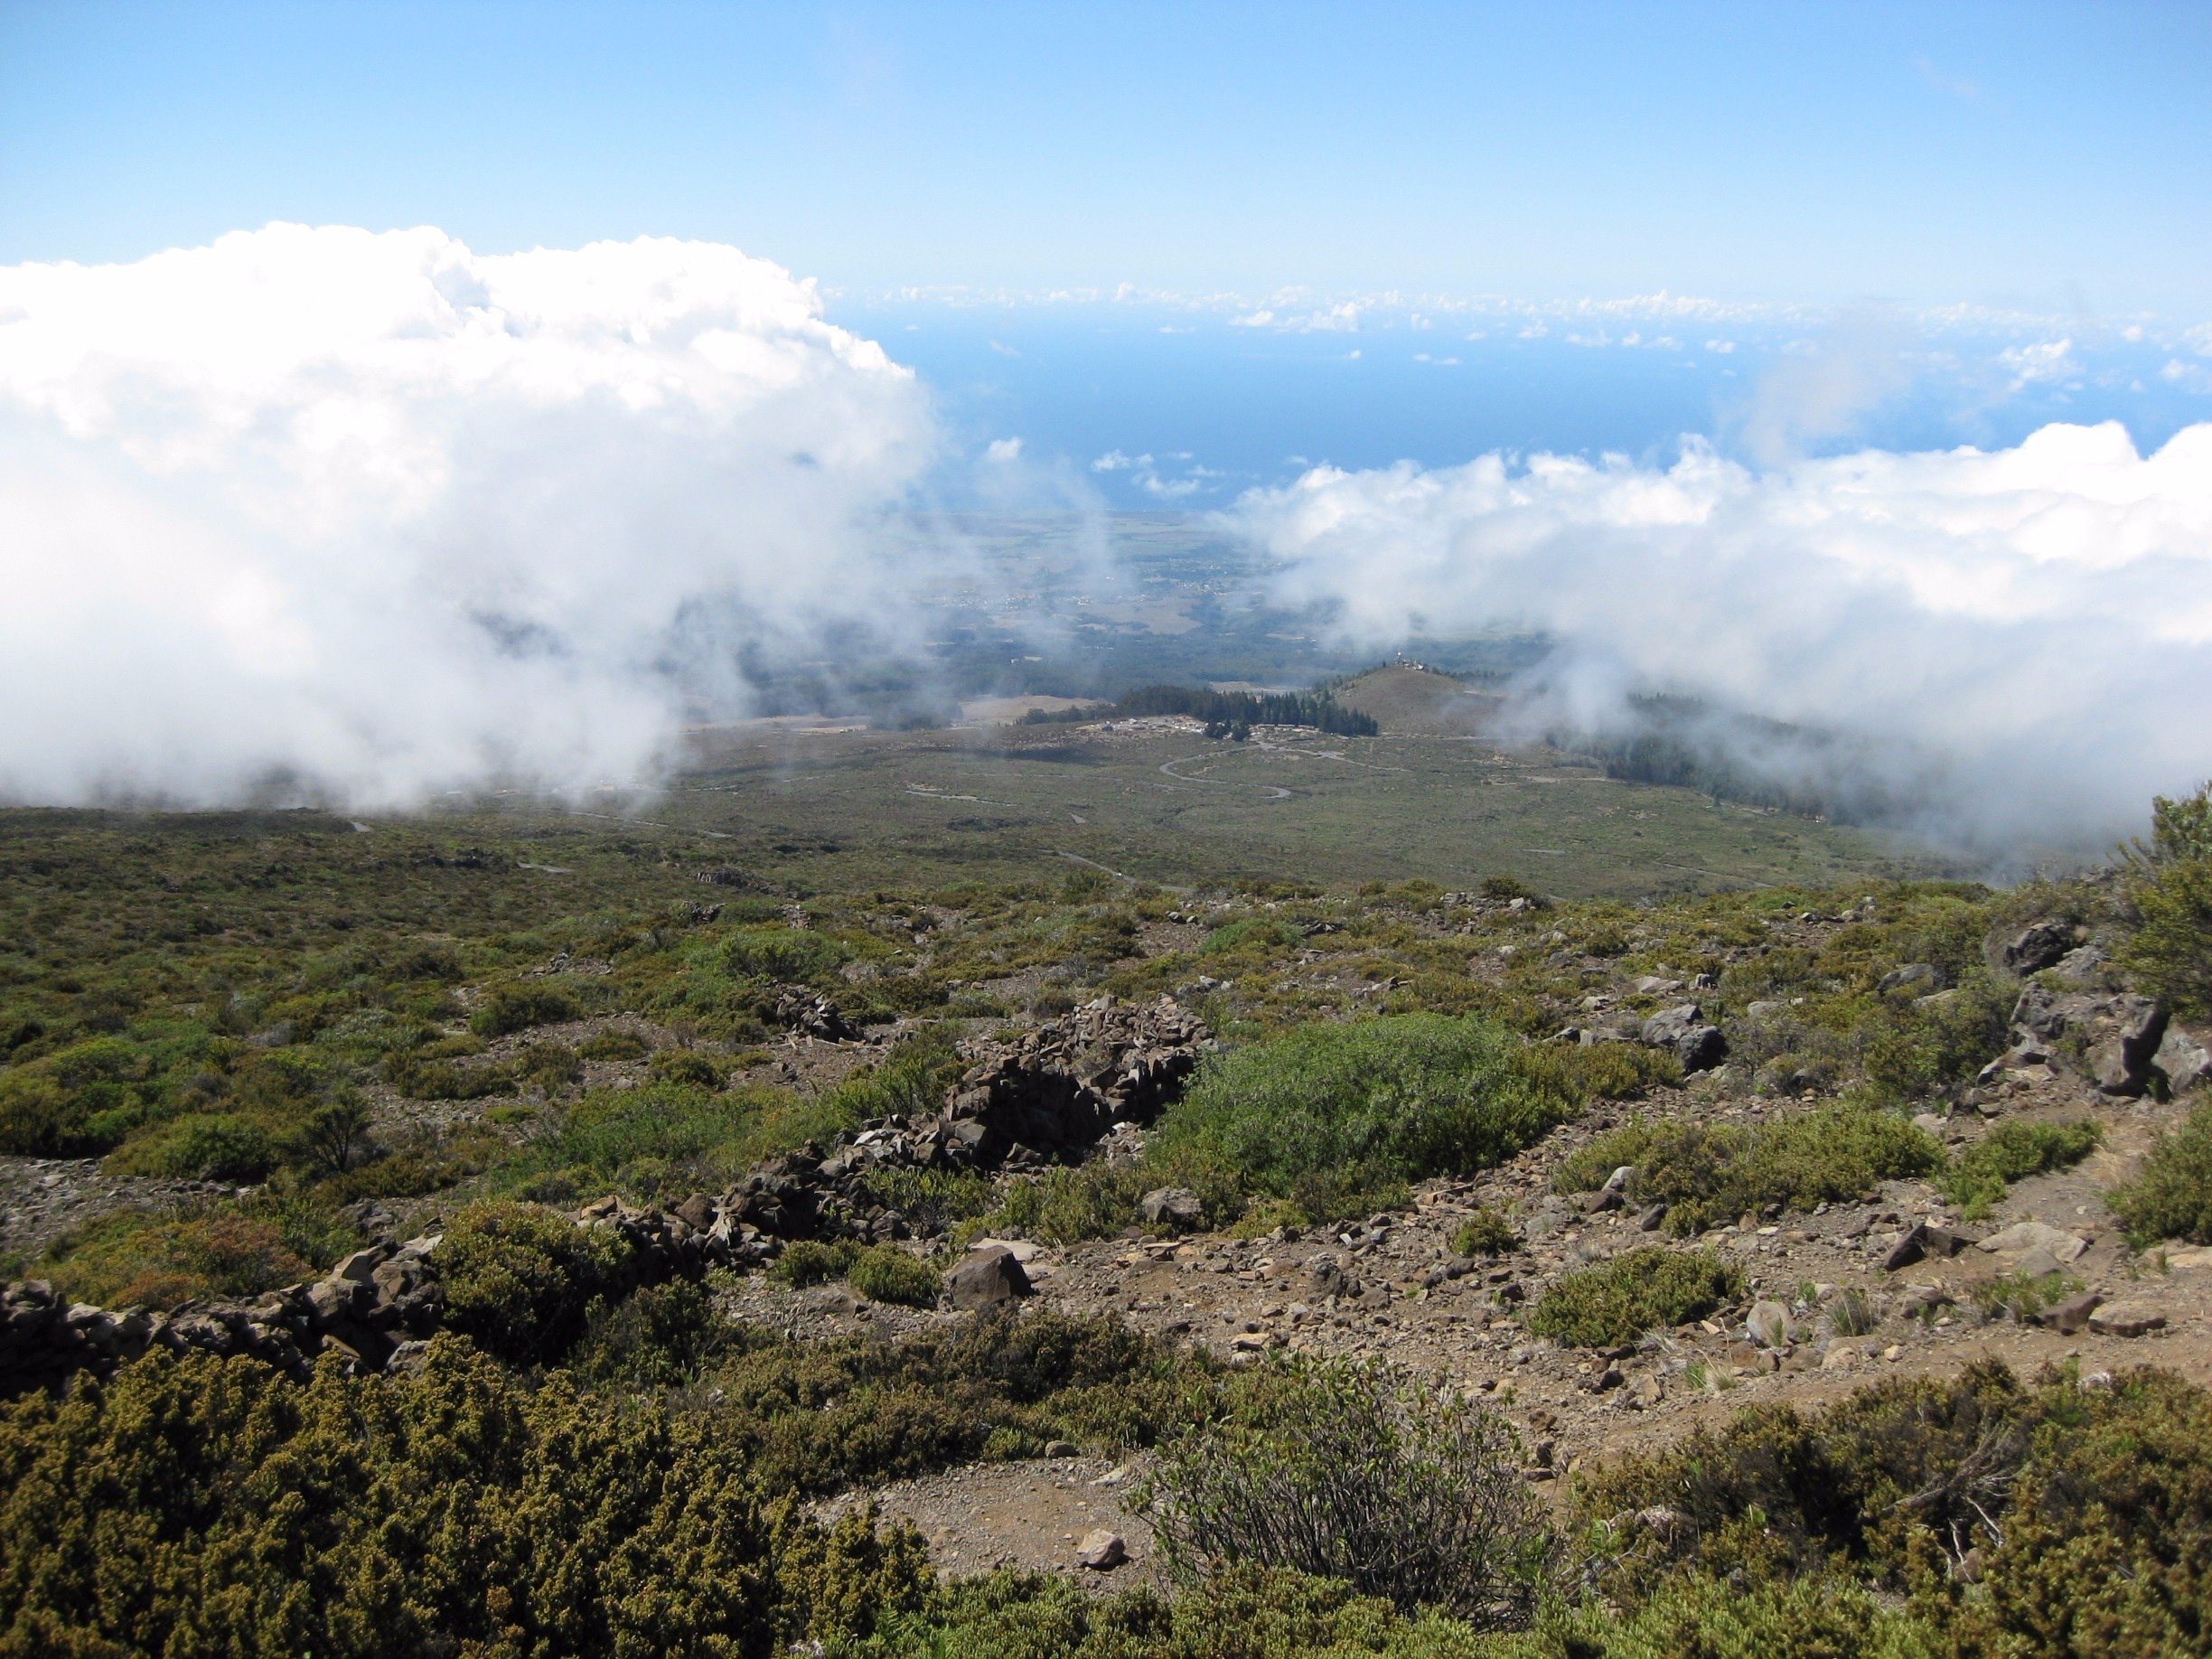 About 8,800 feet elevation (Haleakala)
-2010